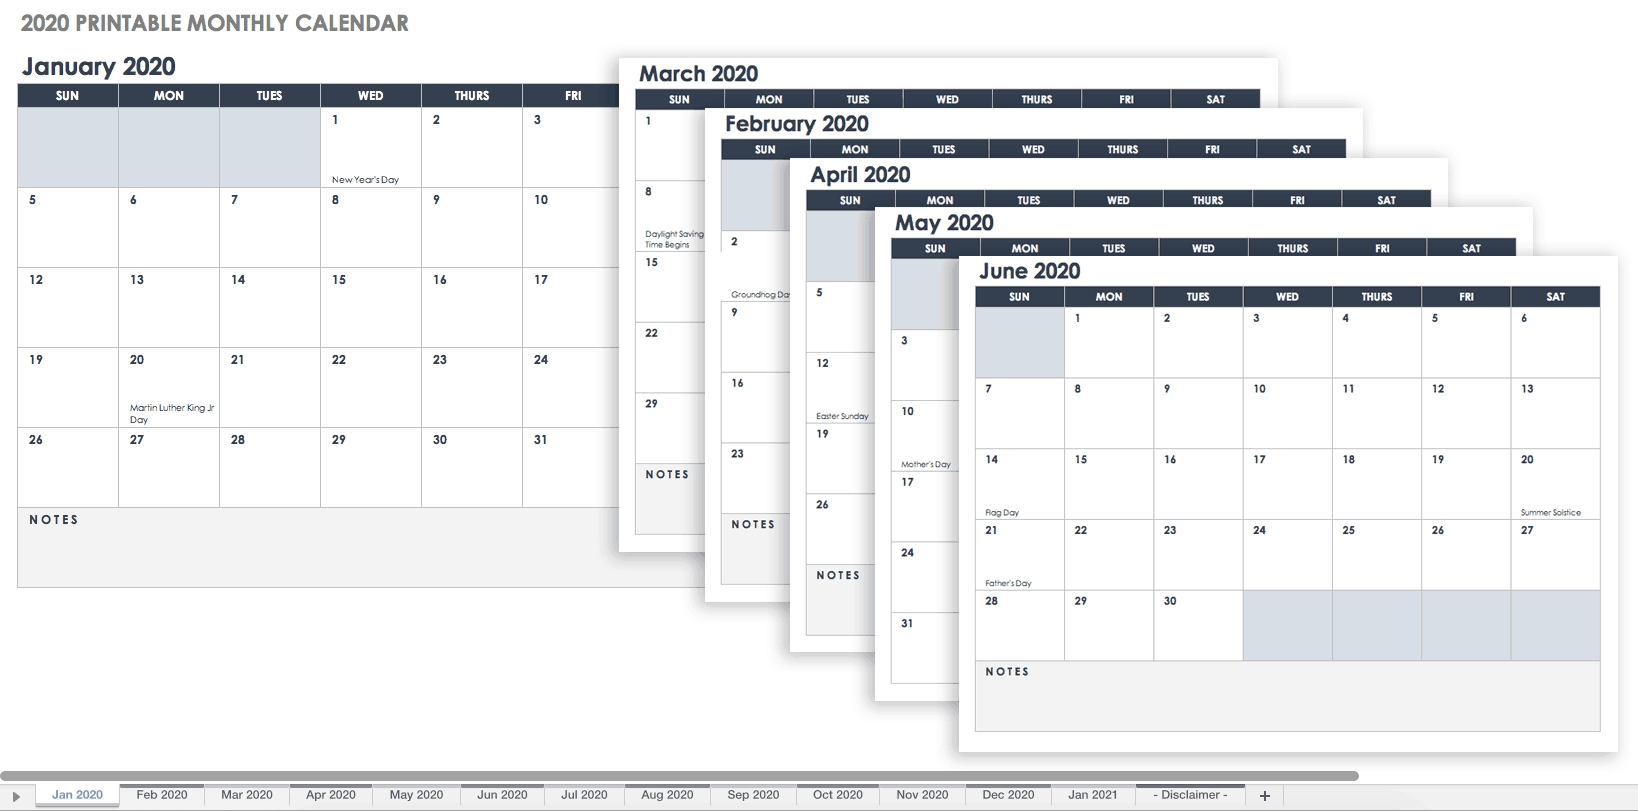 8 X 10 Prinable Blank Monthly Calendar | Calendar Template-Free Printable 2021 8 X 10 Monthly Calendars